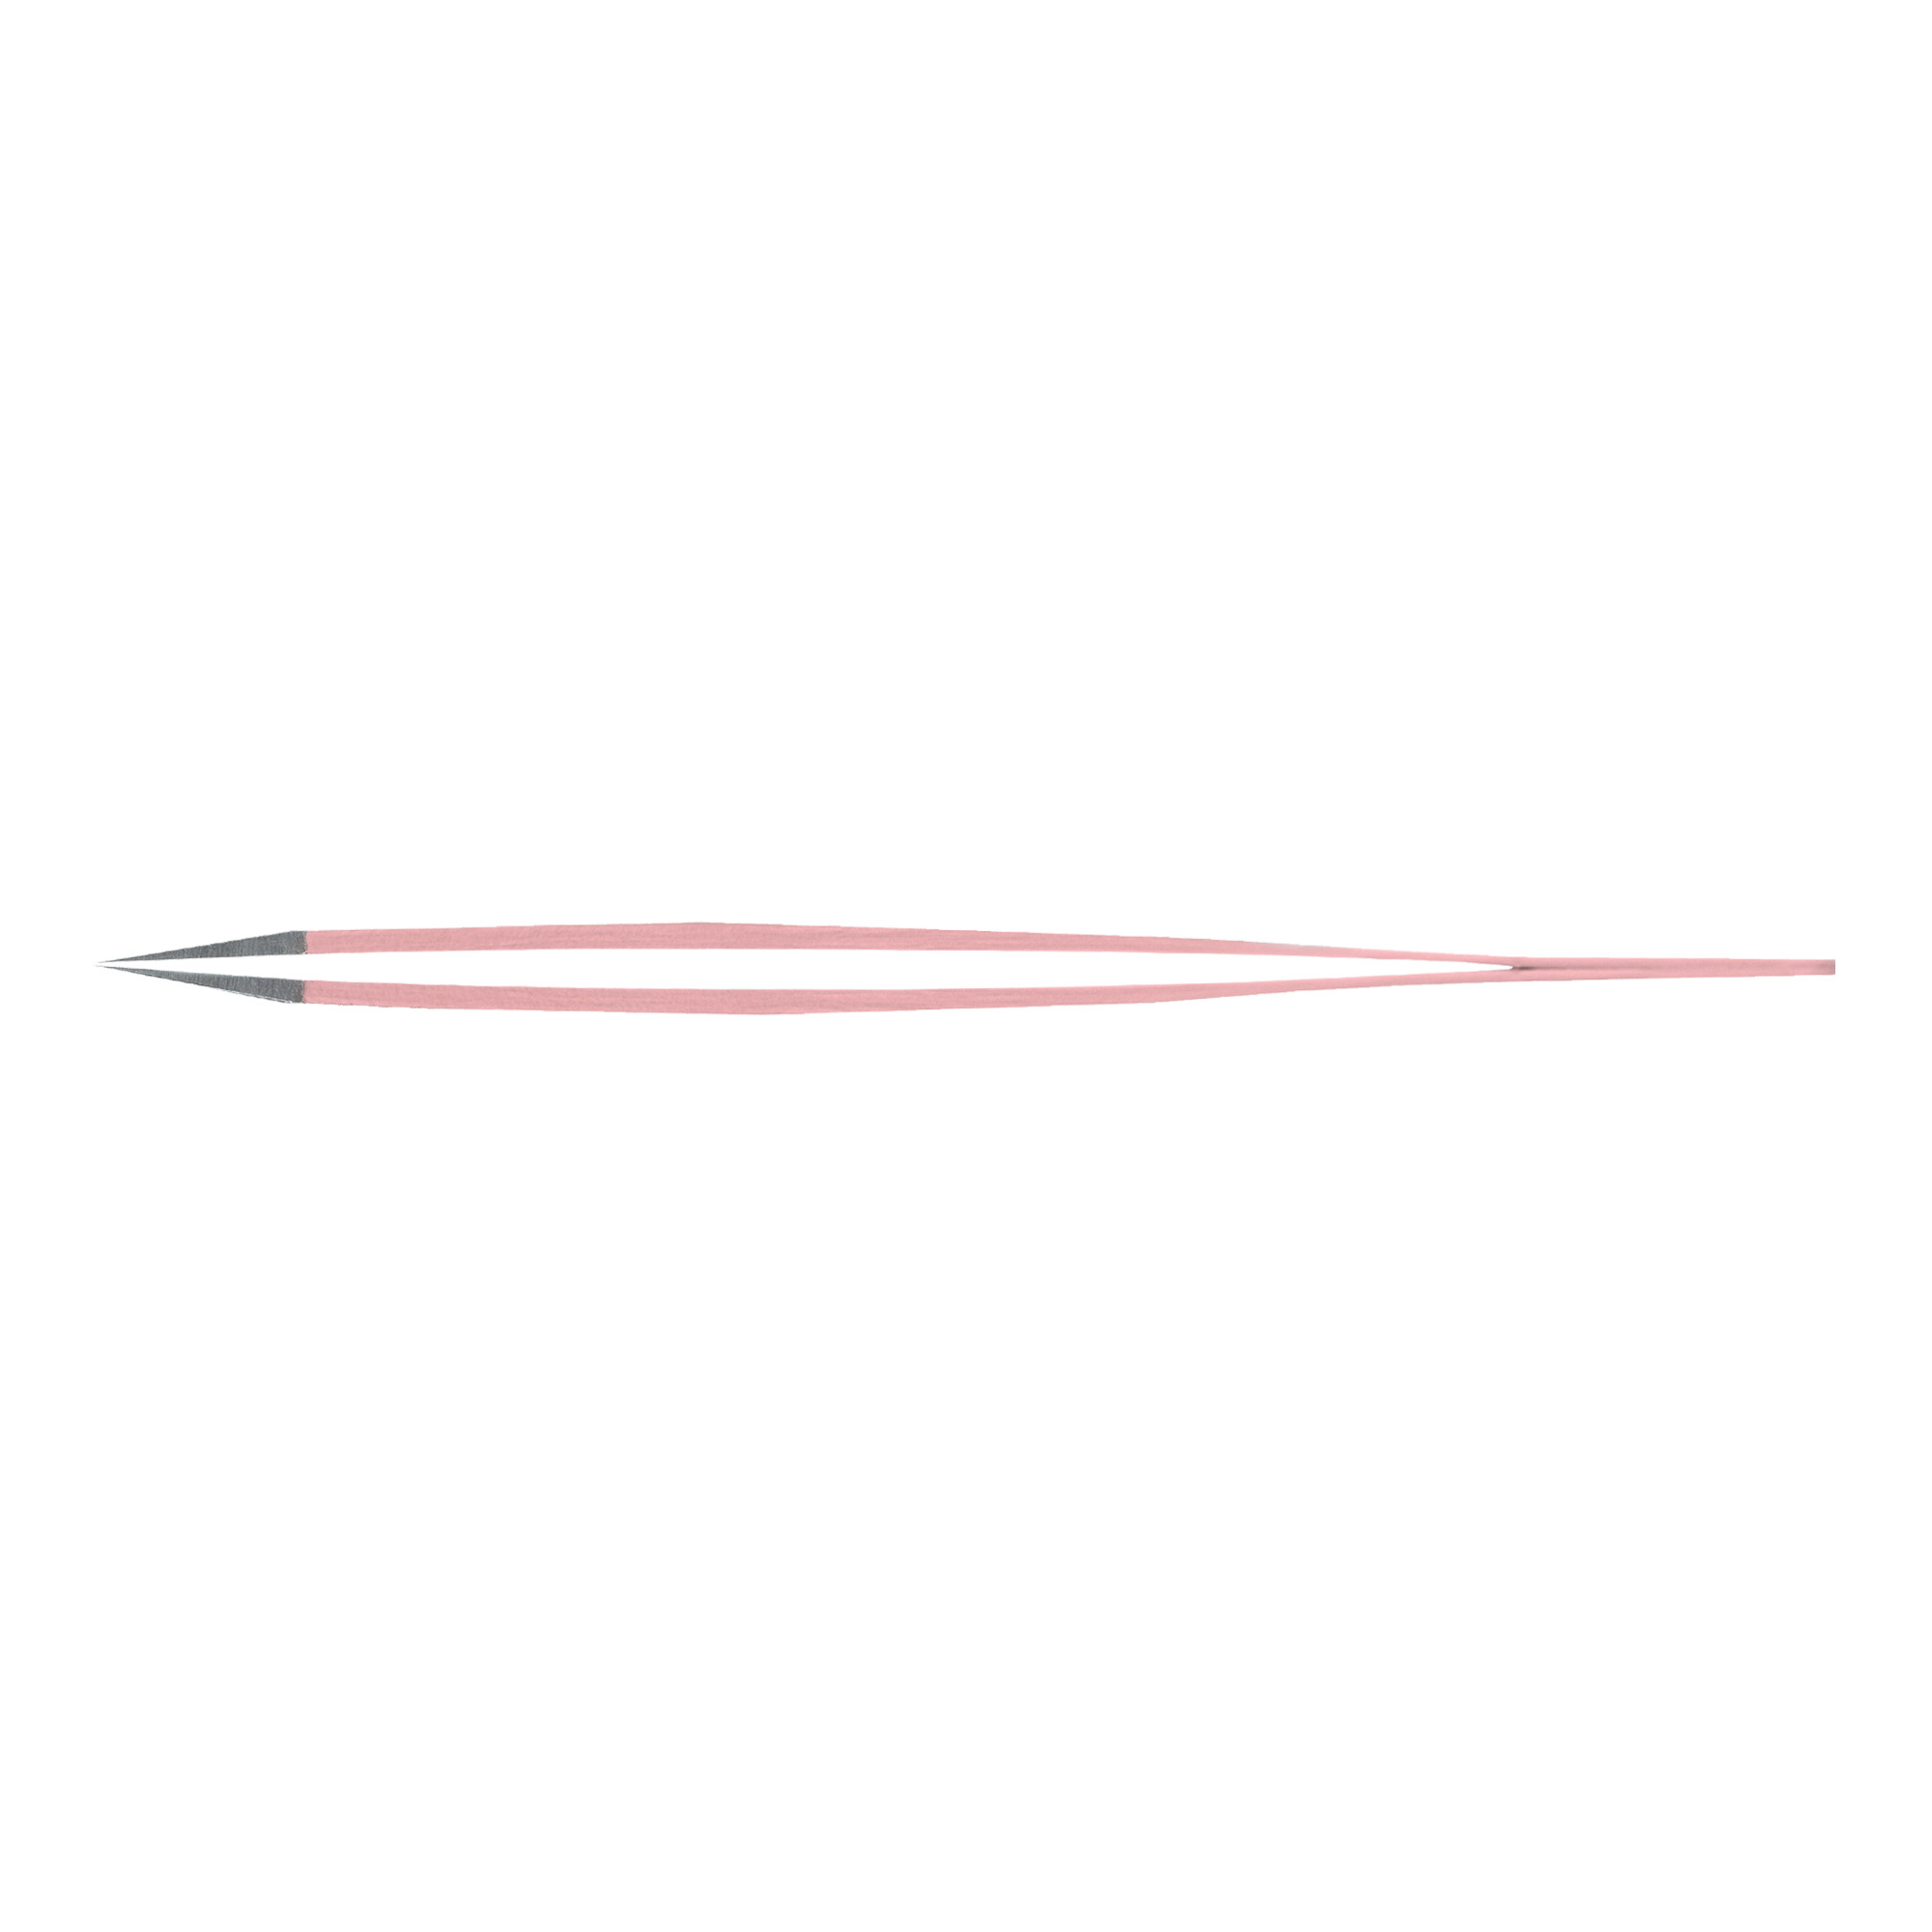 Rubis pointed stainless steel tweezers pink